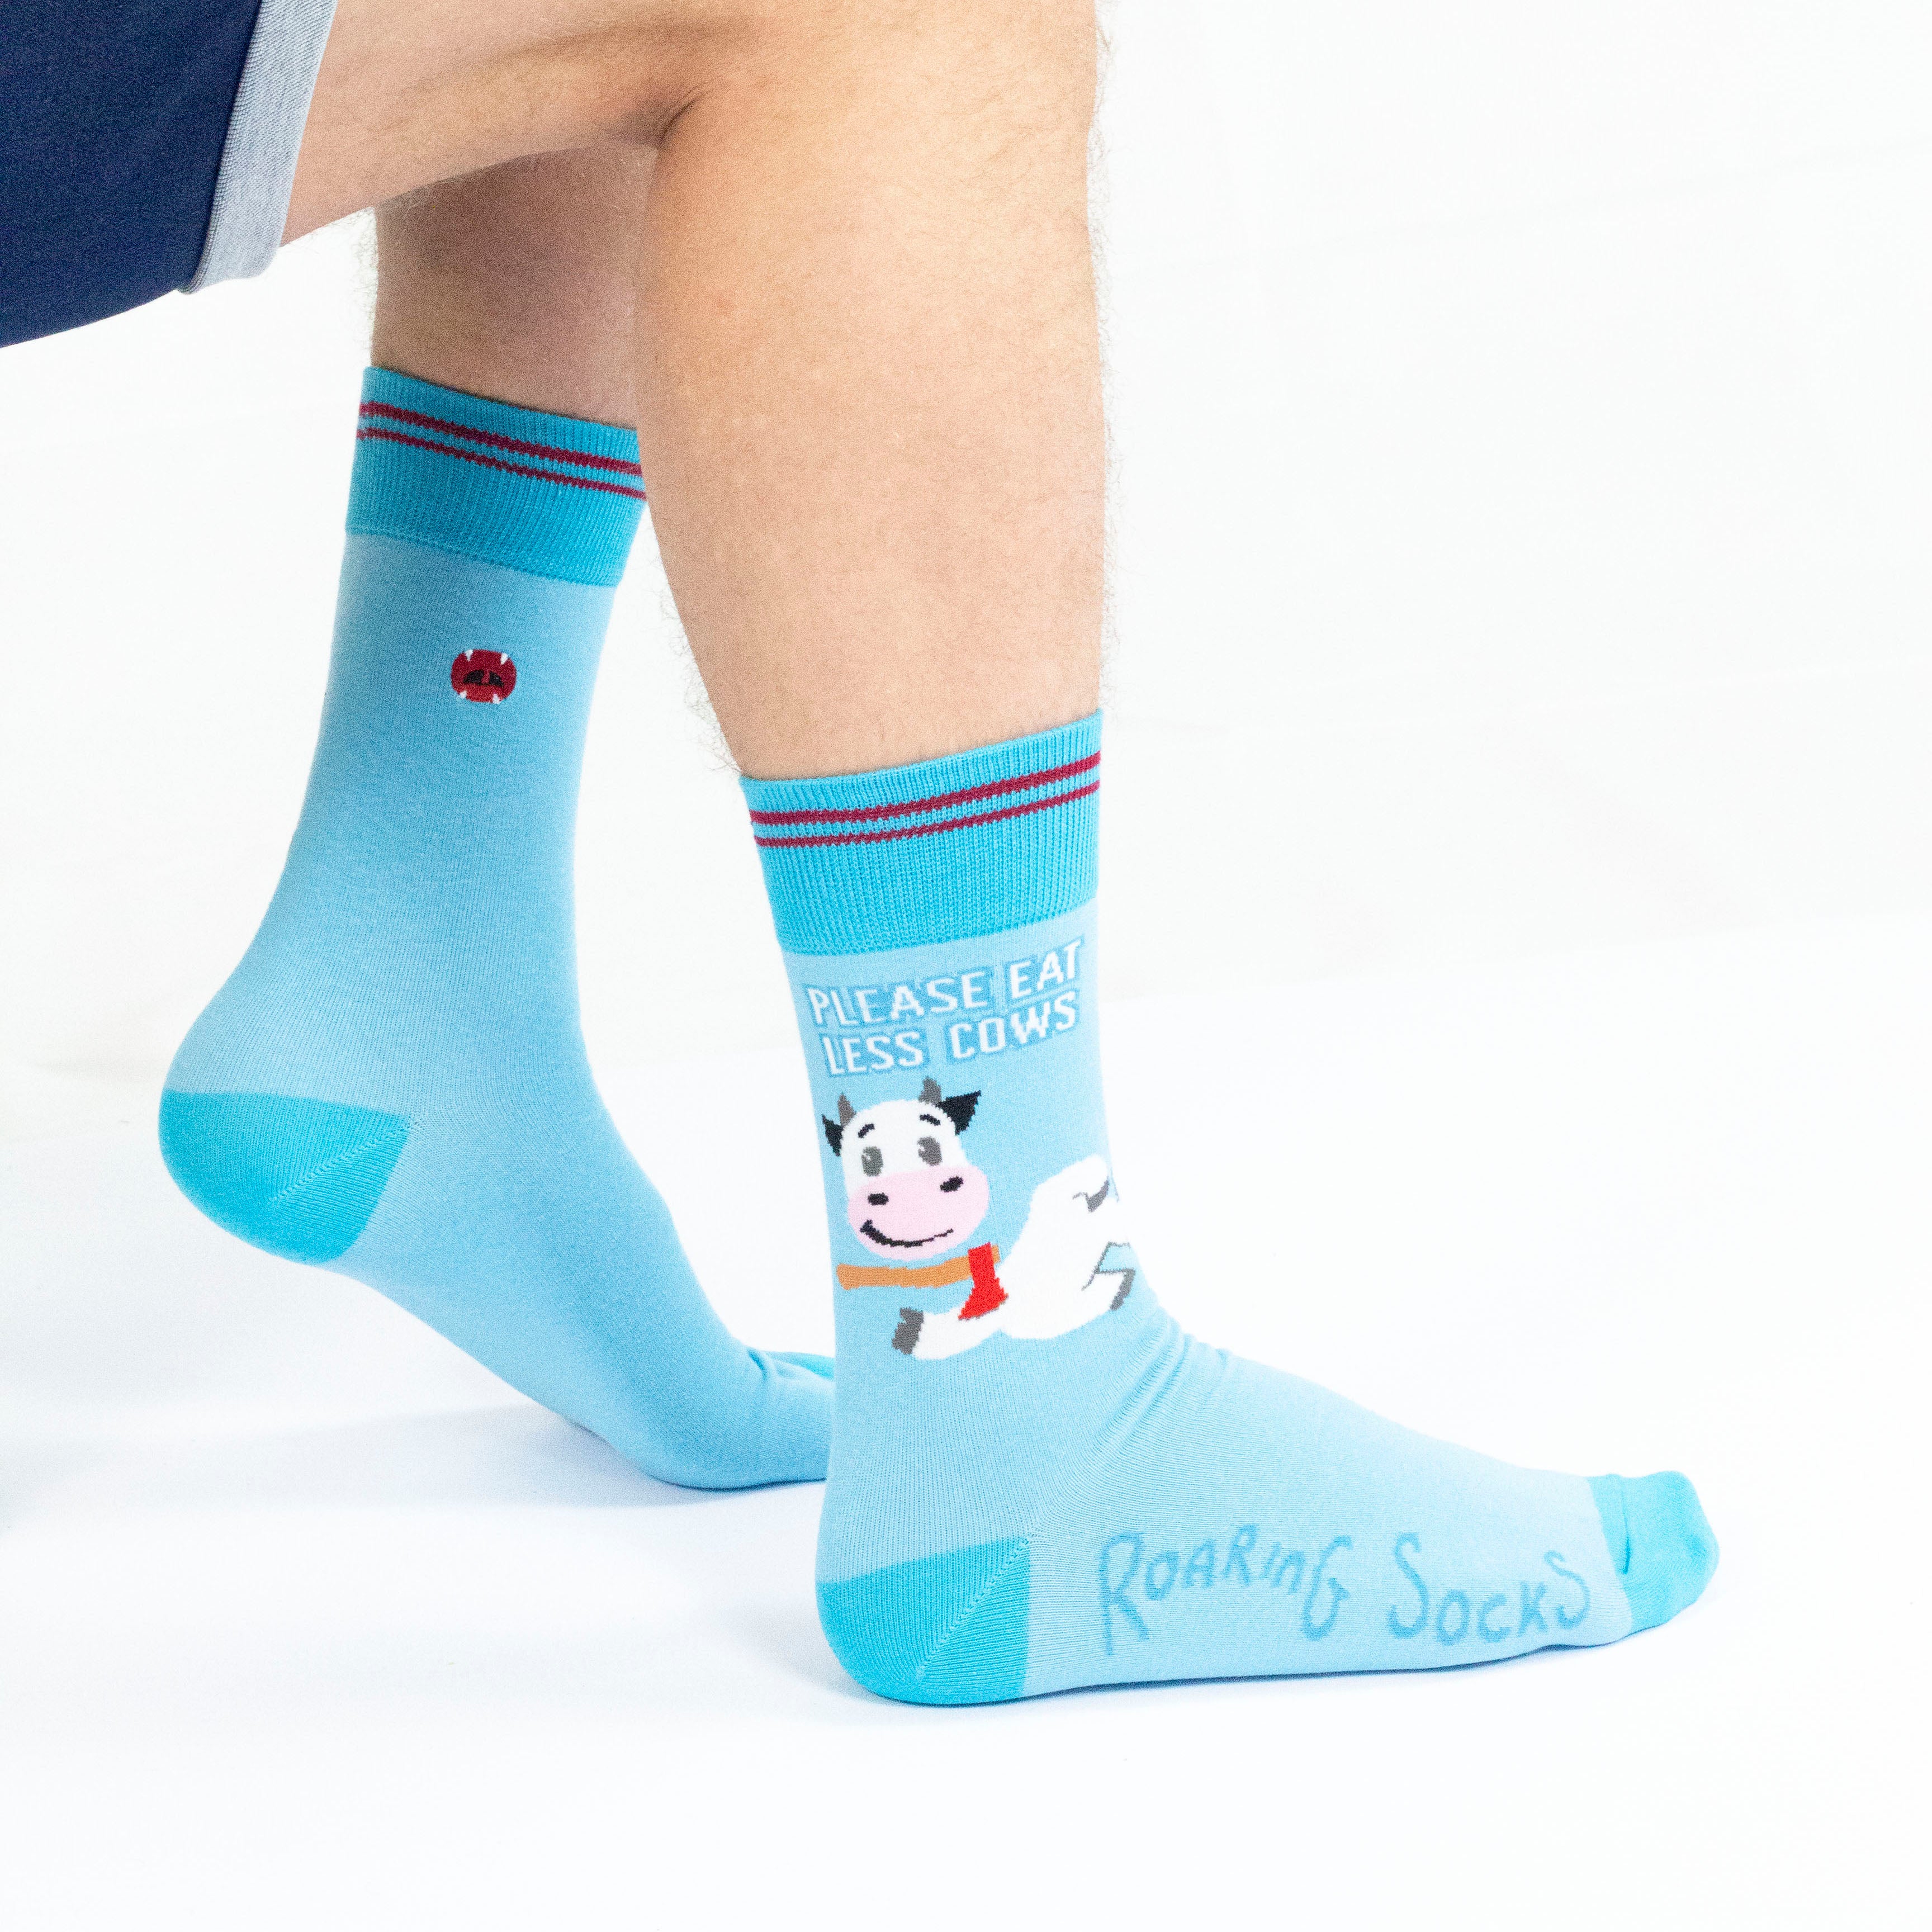 Roaring Socks - Sokken - Please eat less cows - Blauw - Koe - Bijl - Slachten - Vegetariër Vegan - Milieu - Katoen - Leuk - Grappig - Vrolijk - Fashion – Cadeau